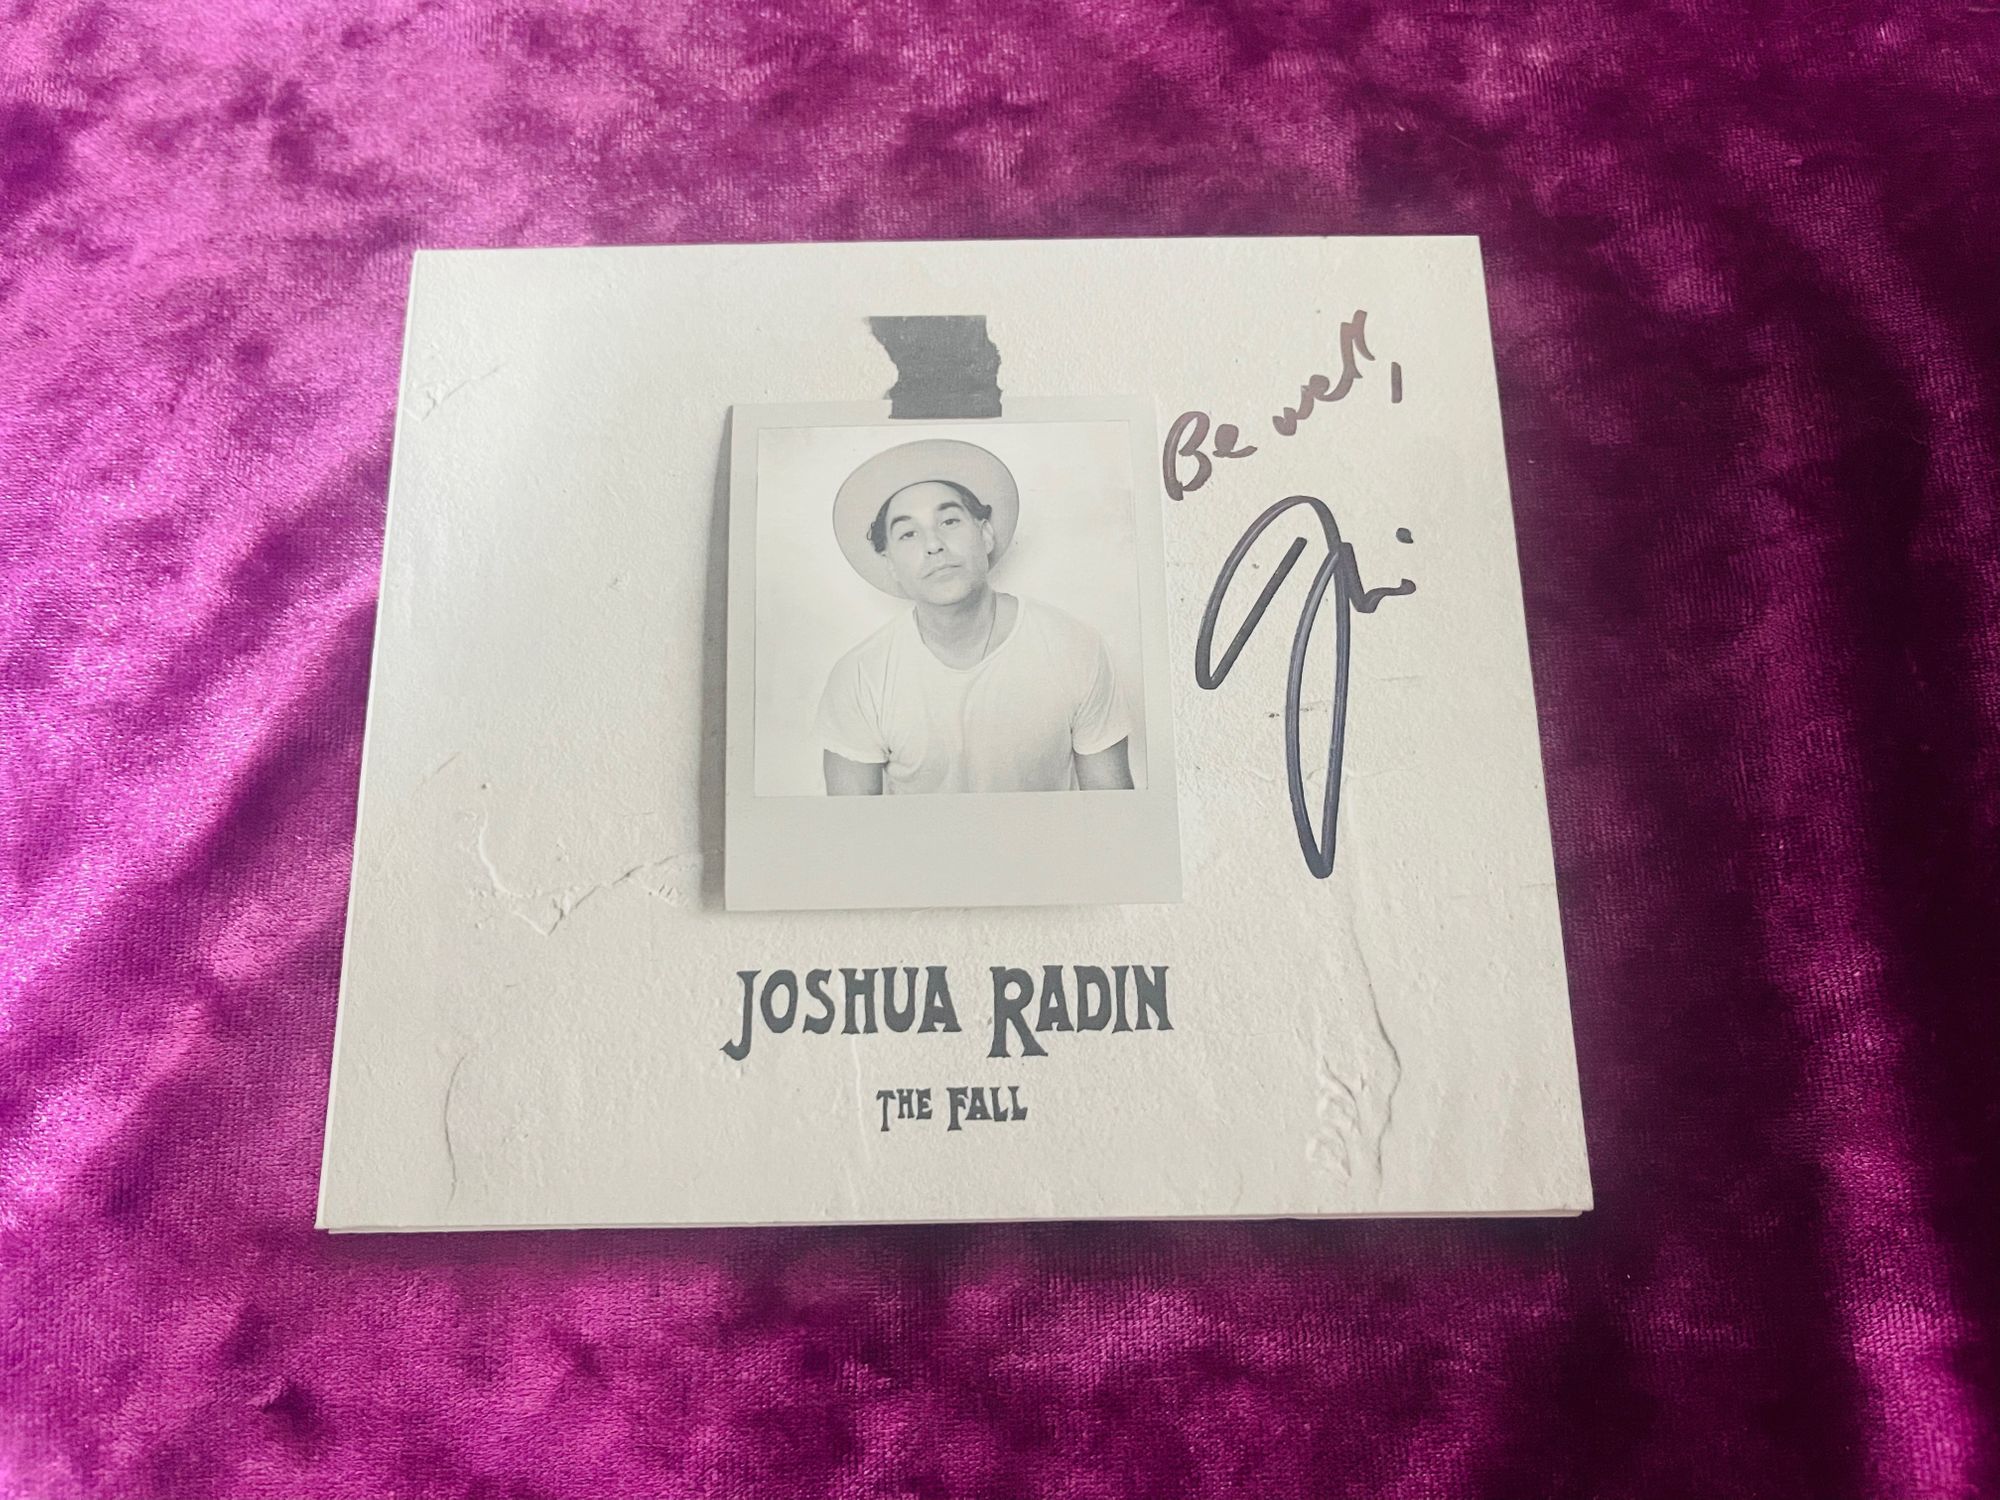 The Fall Album by Joshua Radin